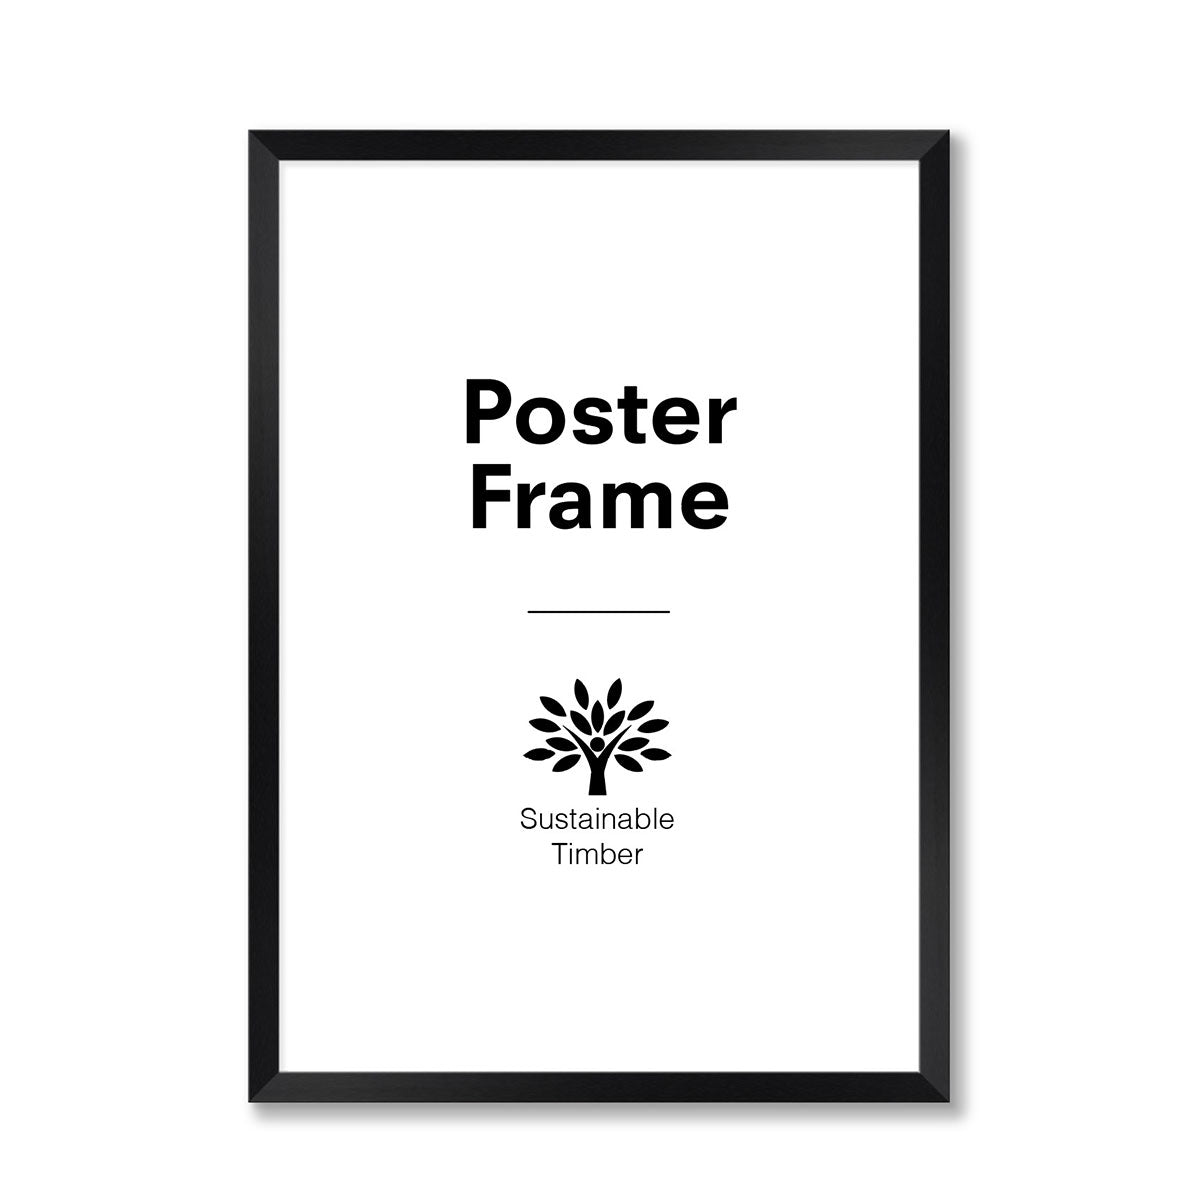 Poster Frame in Black Colour